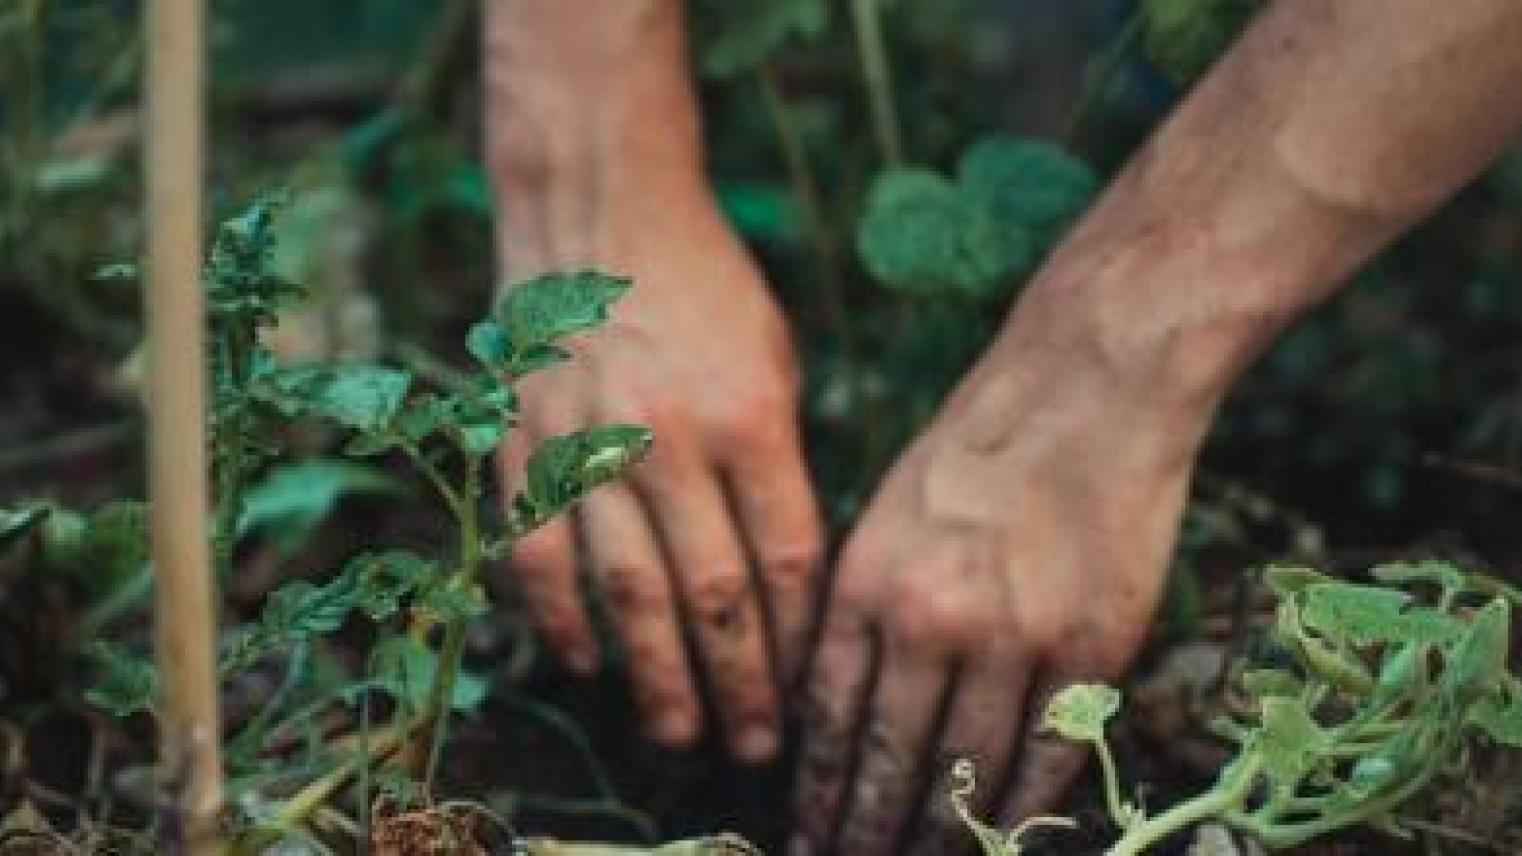 Image of hands gardening by Jonathan Kemper on Unsplash https://unsplash.com/photos/4z3lnwEvZQw